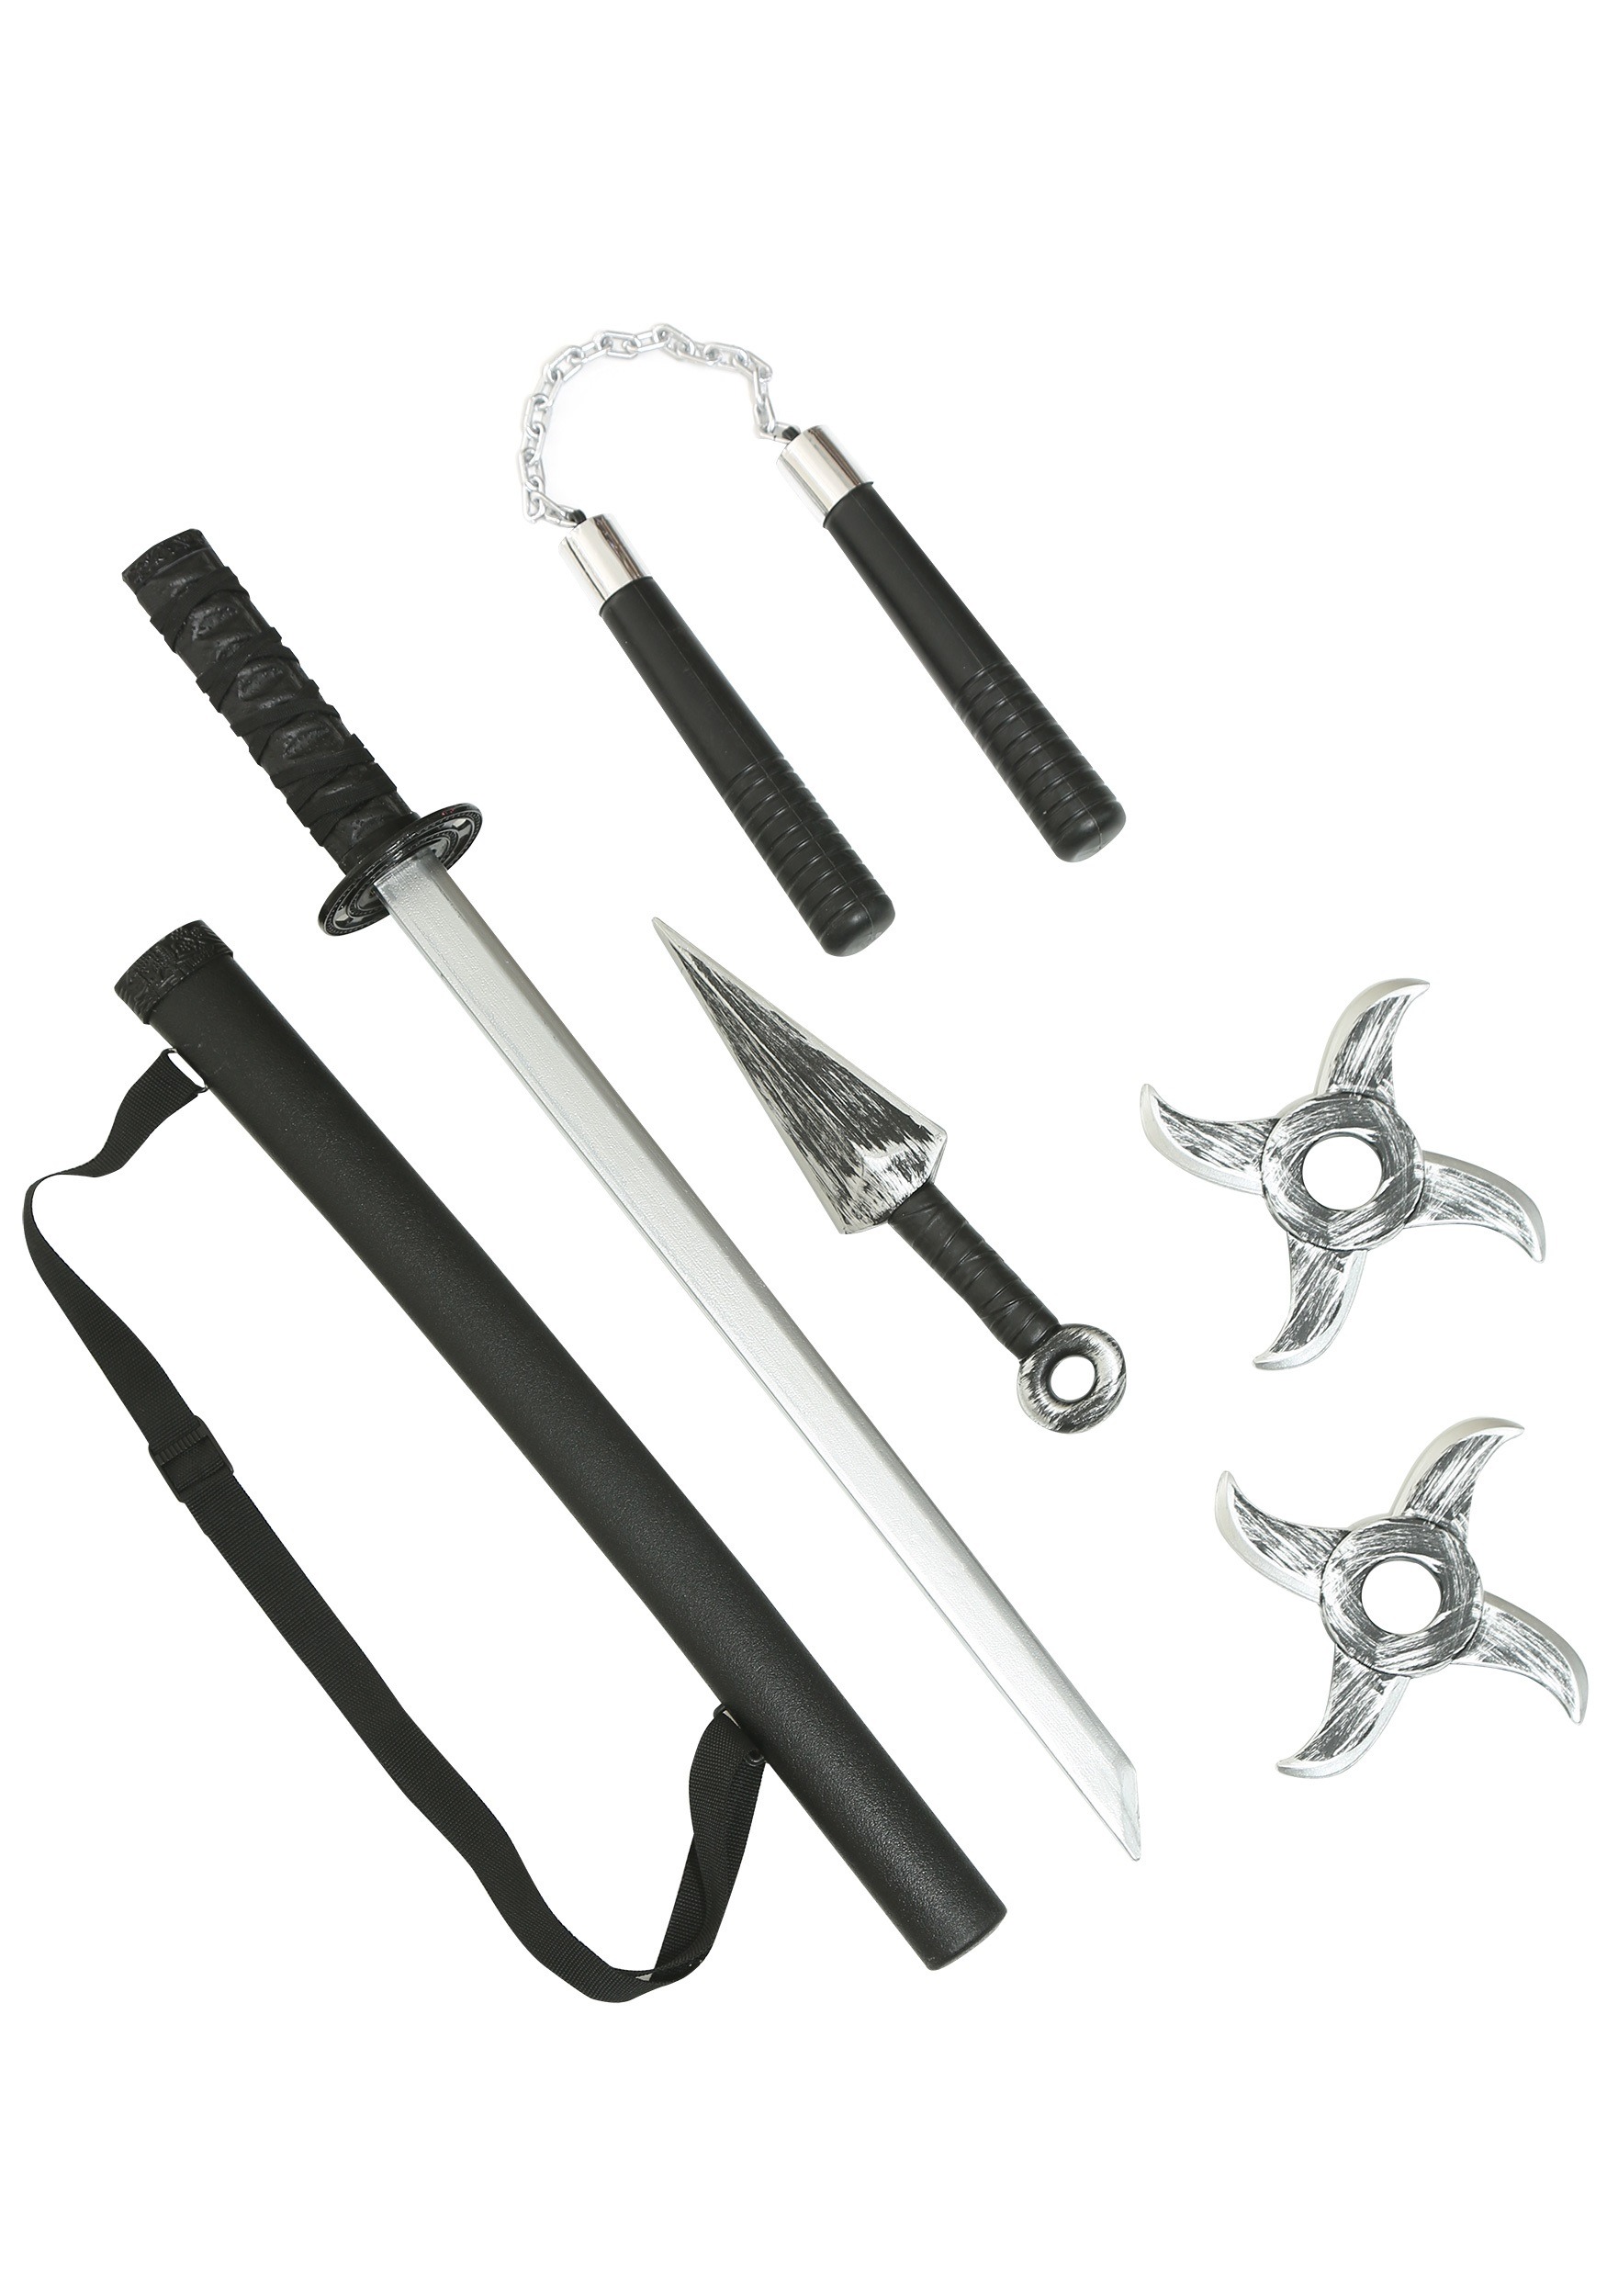 https://images.fun.com/products/38122/1-1/child-ninja-accessory-kit.jpg